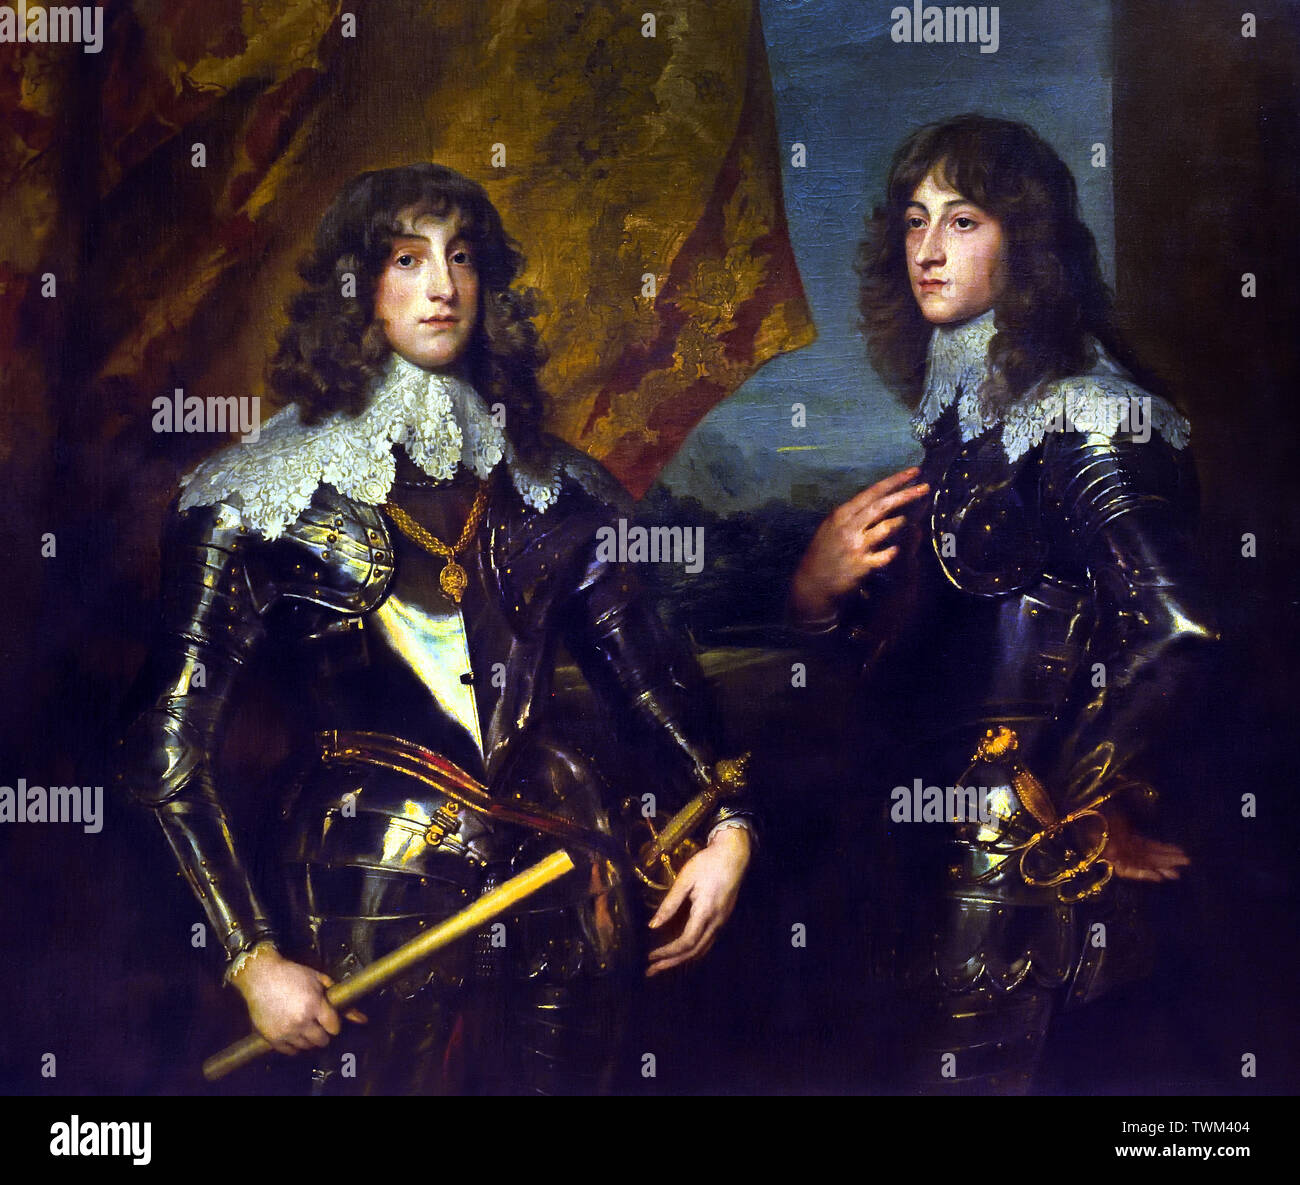 Ritratto del Palatino Princes Charles Louis I e suo fratello Robert 1637 da Anthony Antoon Anton van Dyck 1599-1641 Fiammingo Belgio Belgio Foto Stock